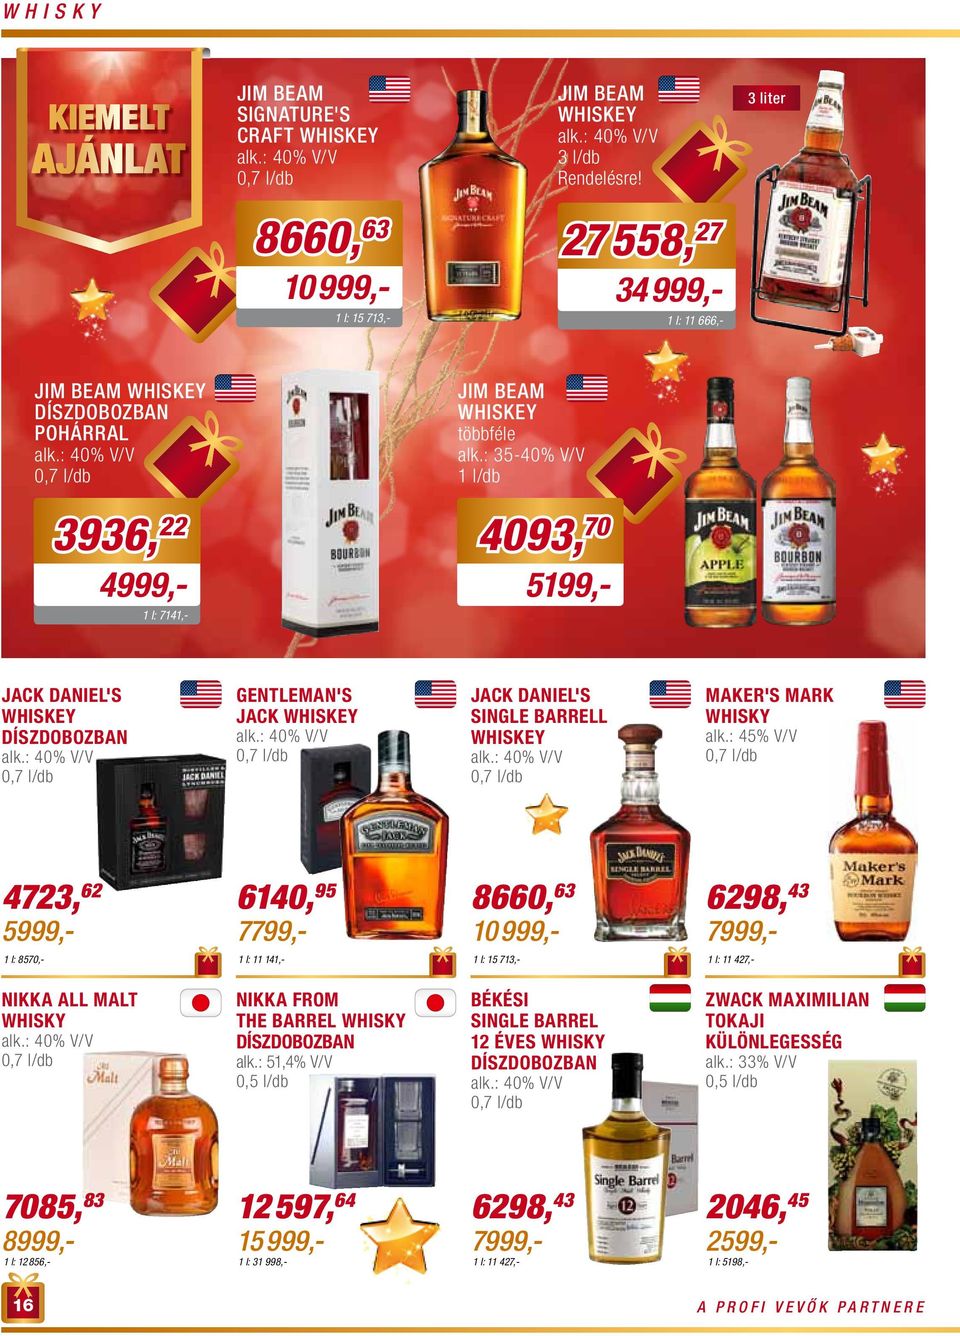 : 35-40% V/V 1 l/db 3936, 22 4999,- 1 l: 7141,- 4093, 70 5199,- Jack Daniel's whiskey Gentleman's Jack whiskey Jack Daniel's Single Barrell whiskey Maker's Mark whisky alk.